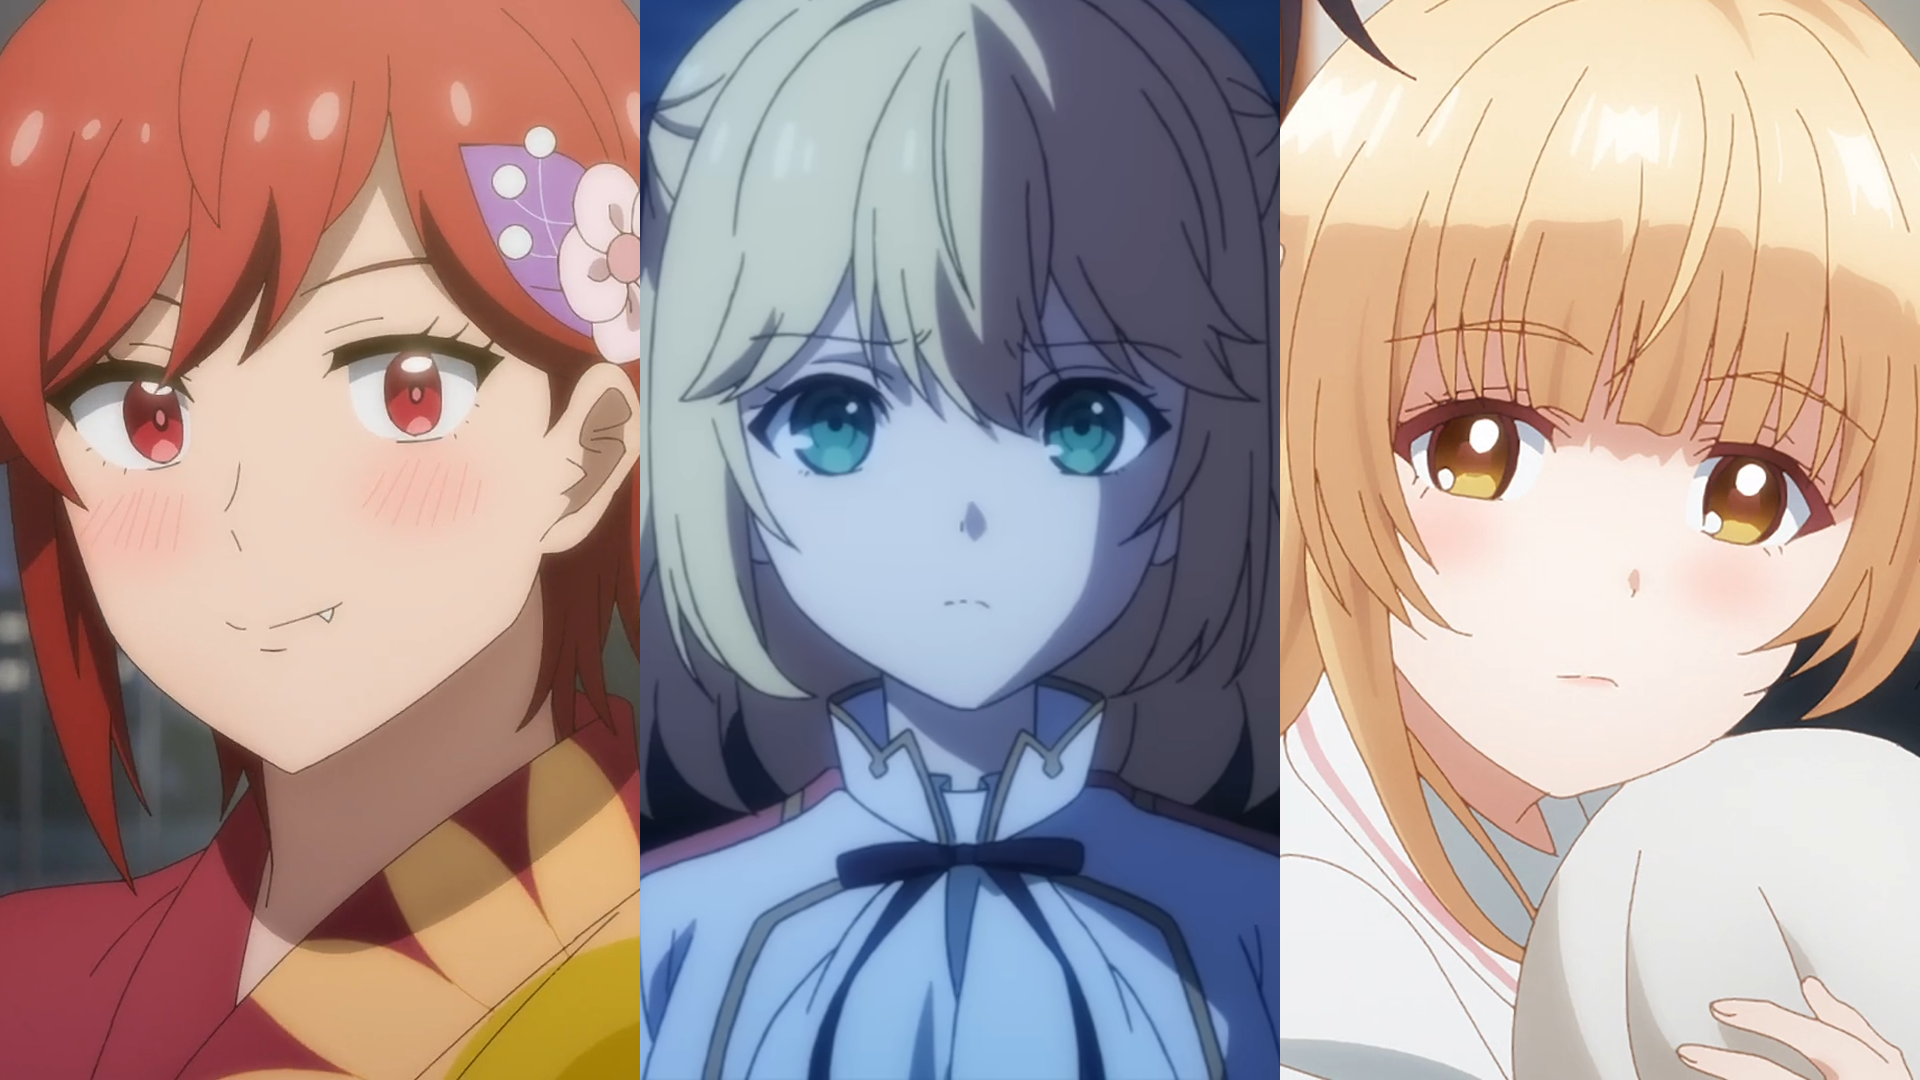 Top 10 Anime of the Week #8 - Winter 2023 (Anime Corner) : r/anime